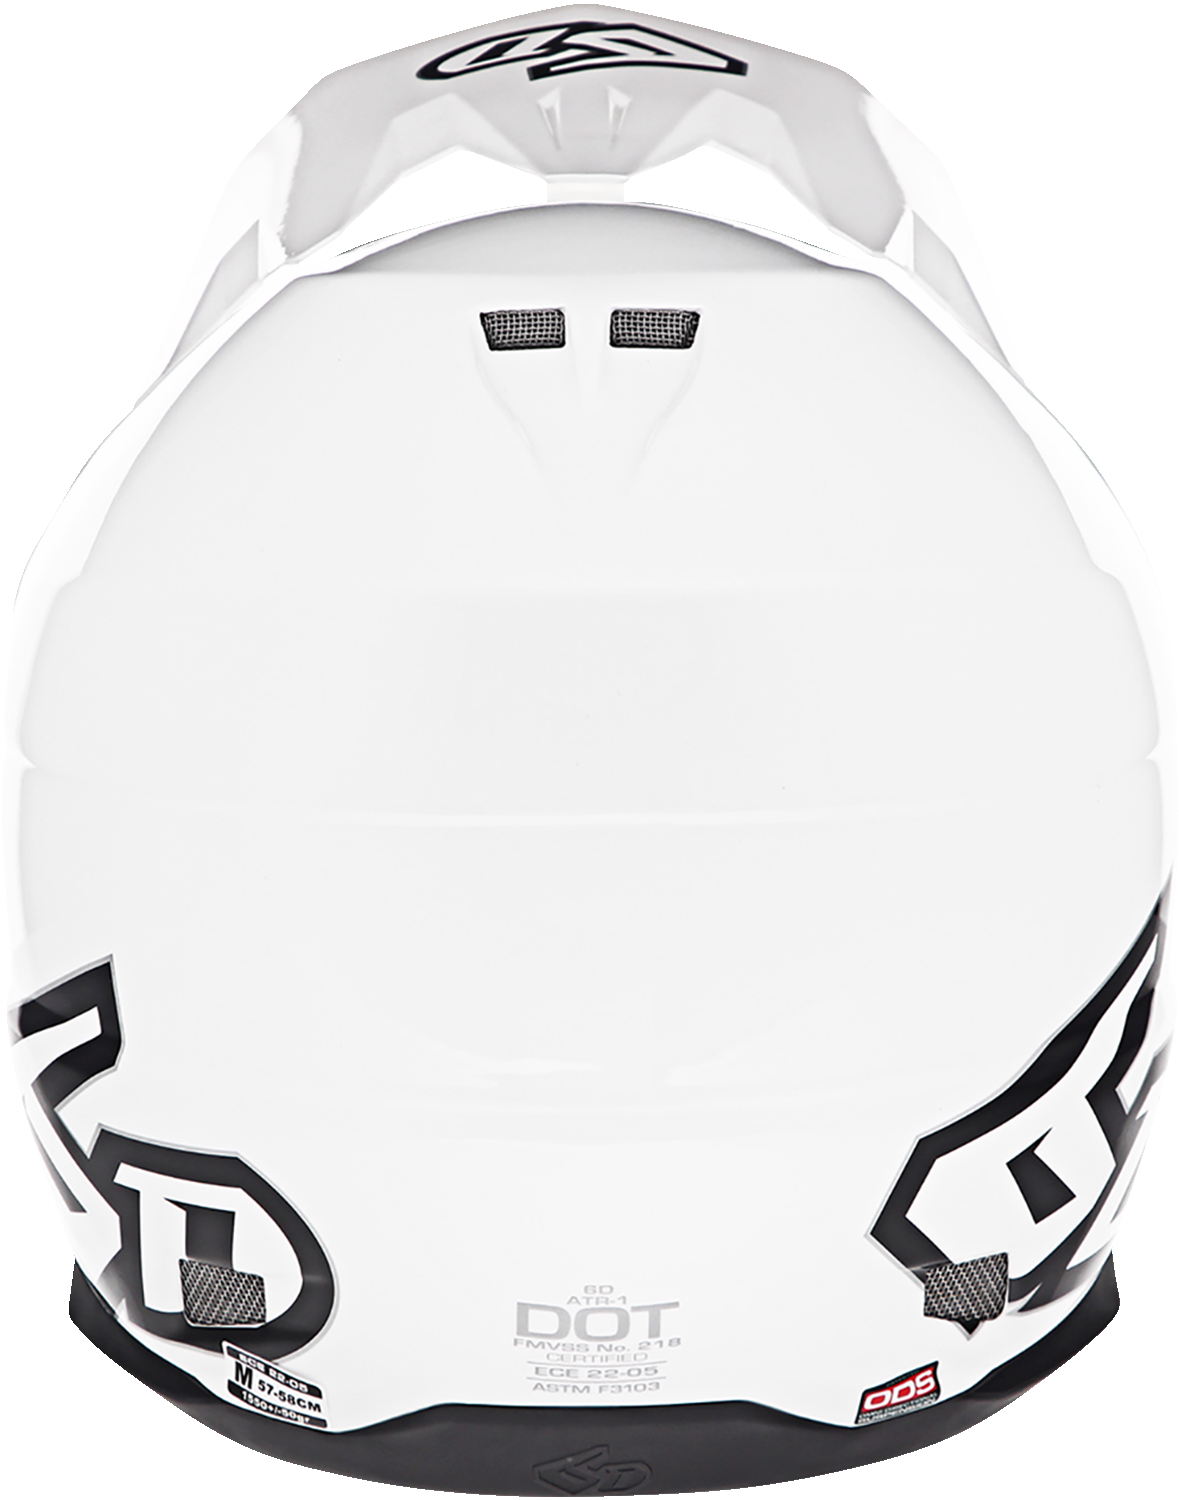 6D ATR-1 Helmet - White - Medium 10-3726